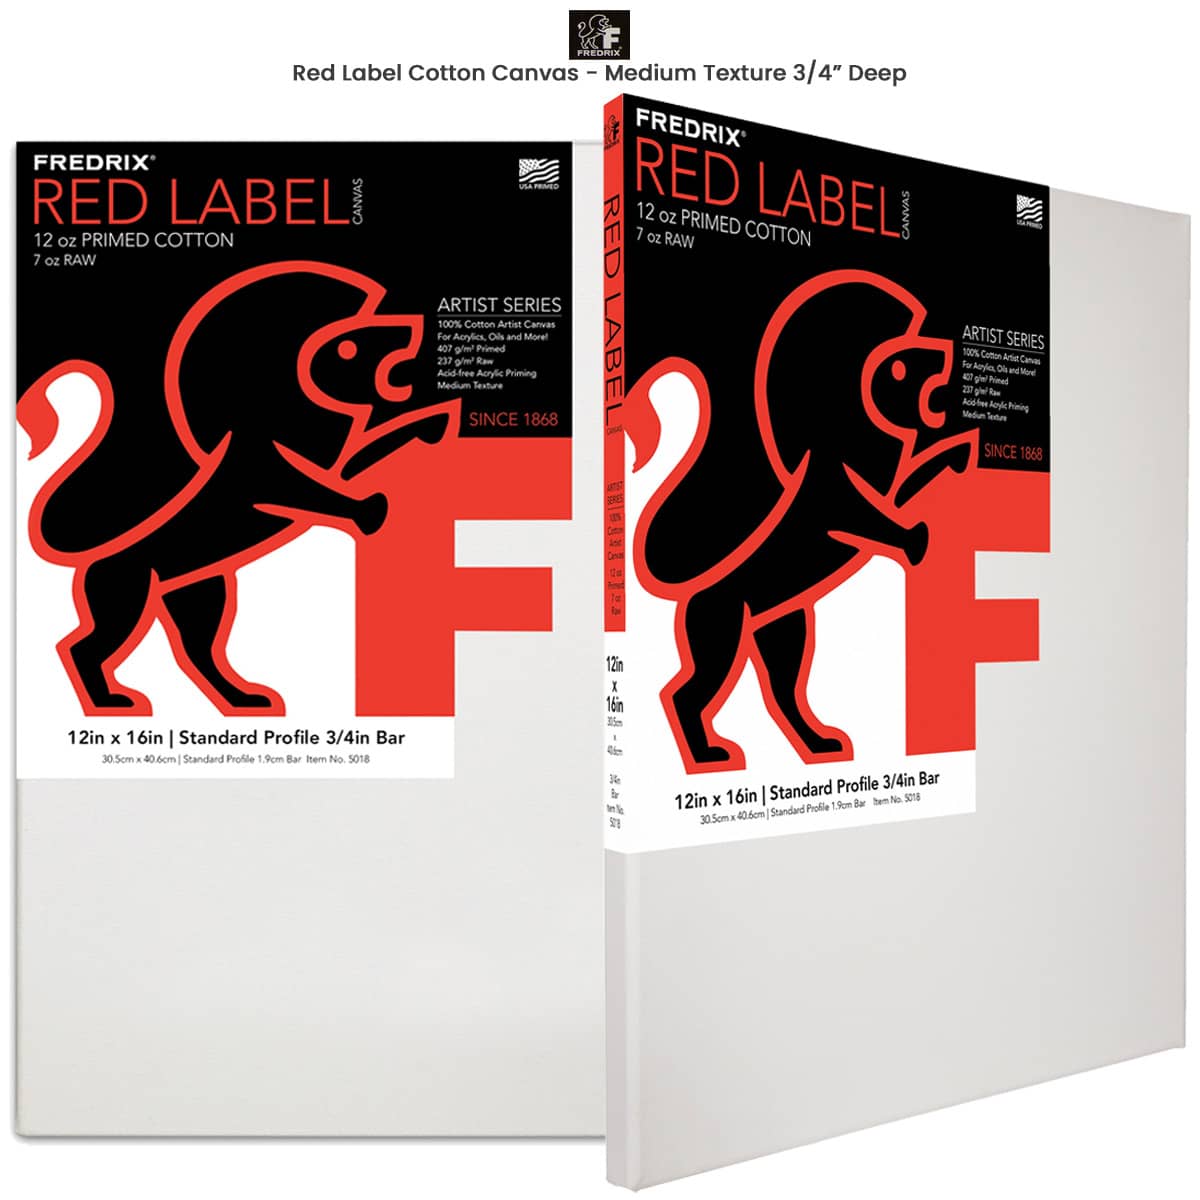 Fredrix Red Label Cotton Canvas - Medium Texture 3/4 Deep